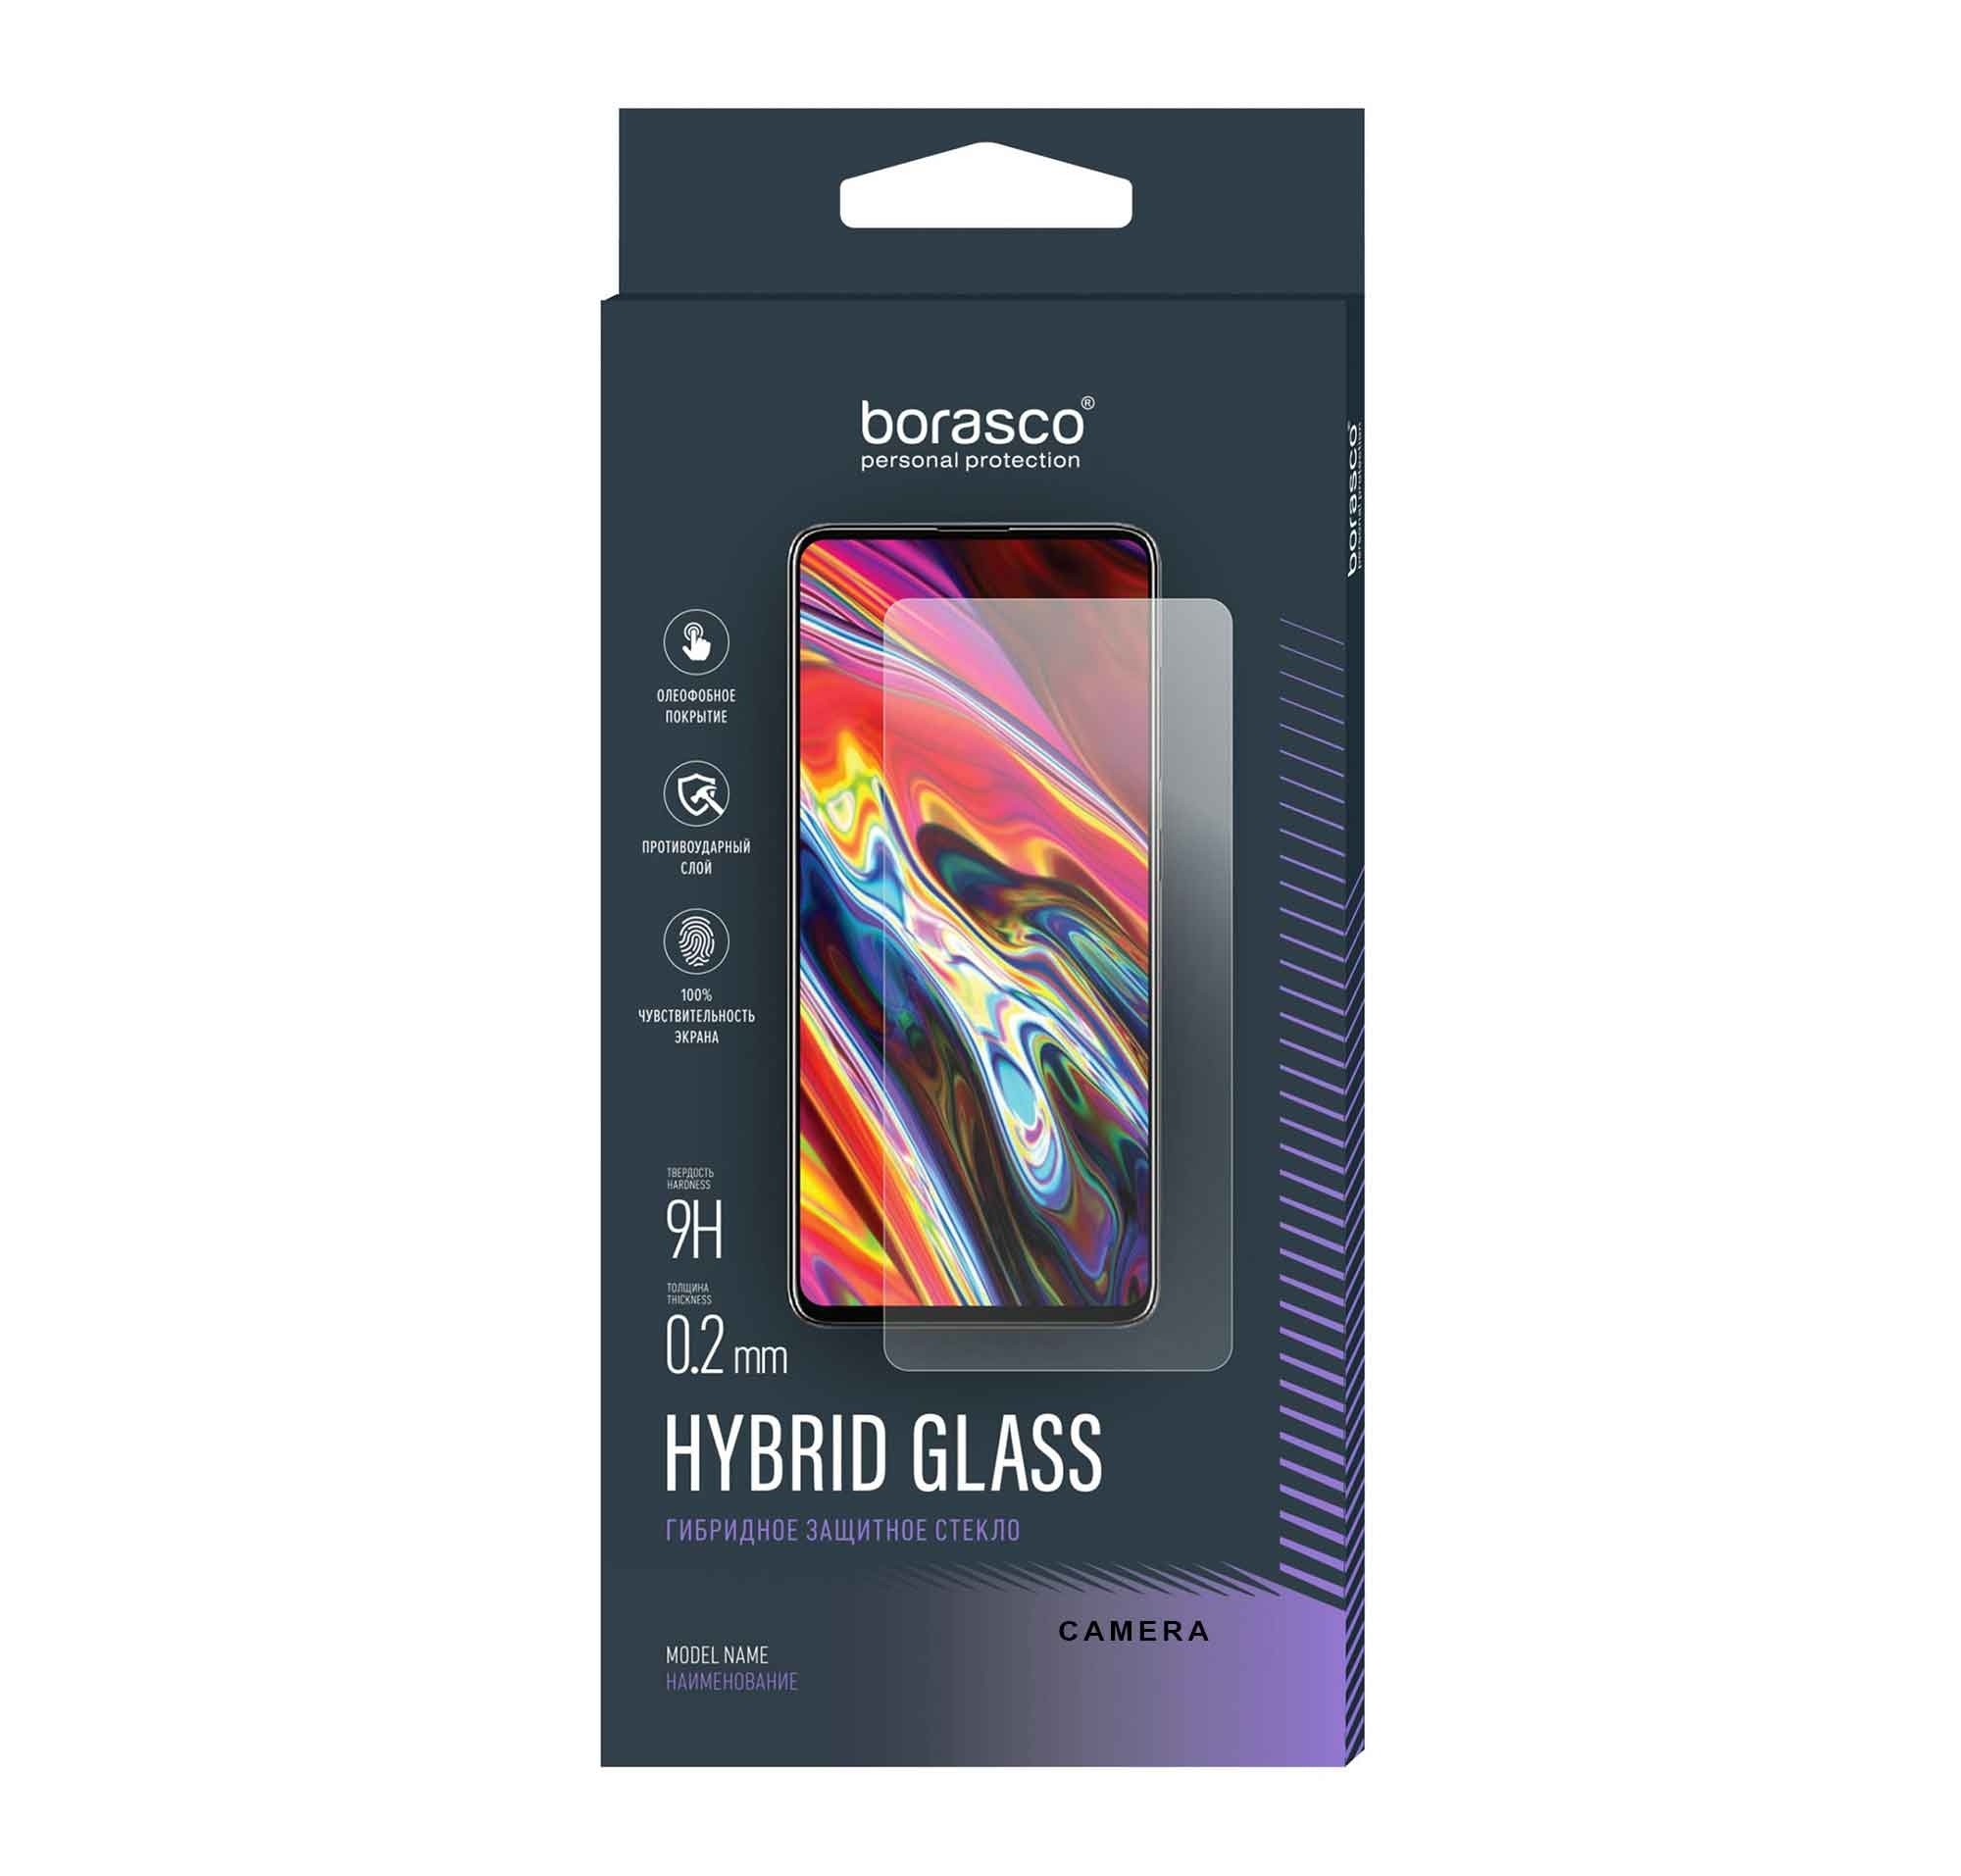 Защитное стекло (Экран+Камера) BoraSCO Hybrid Glass для ITEL Vision 3 Plus чехол mypads злой тигр с цветами для itel vision 3 plus itel p38 pro задняя панель накладка бампер